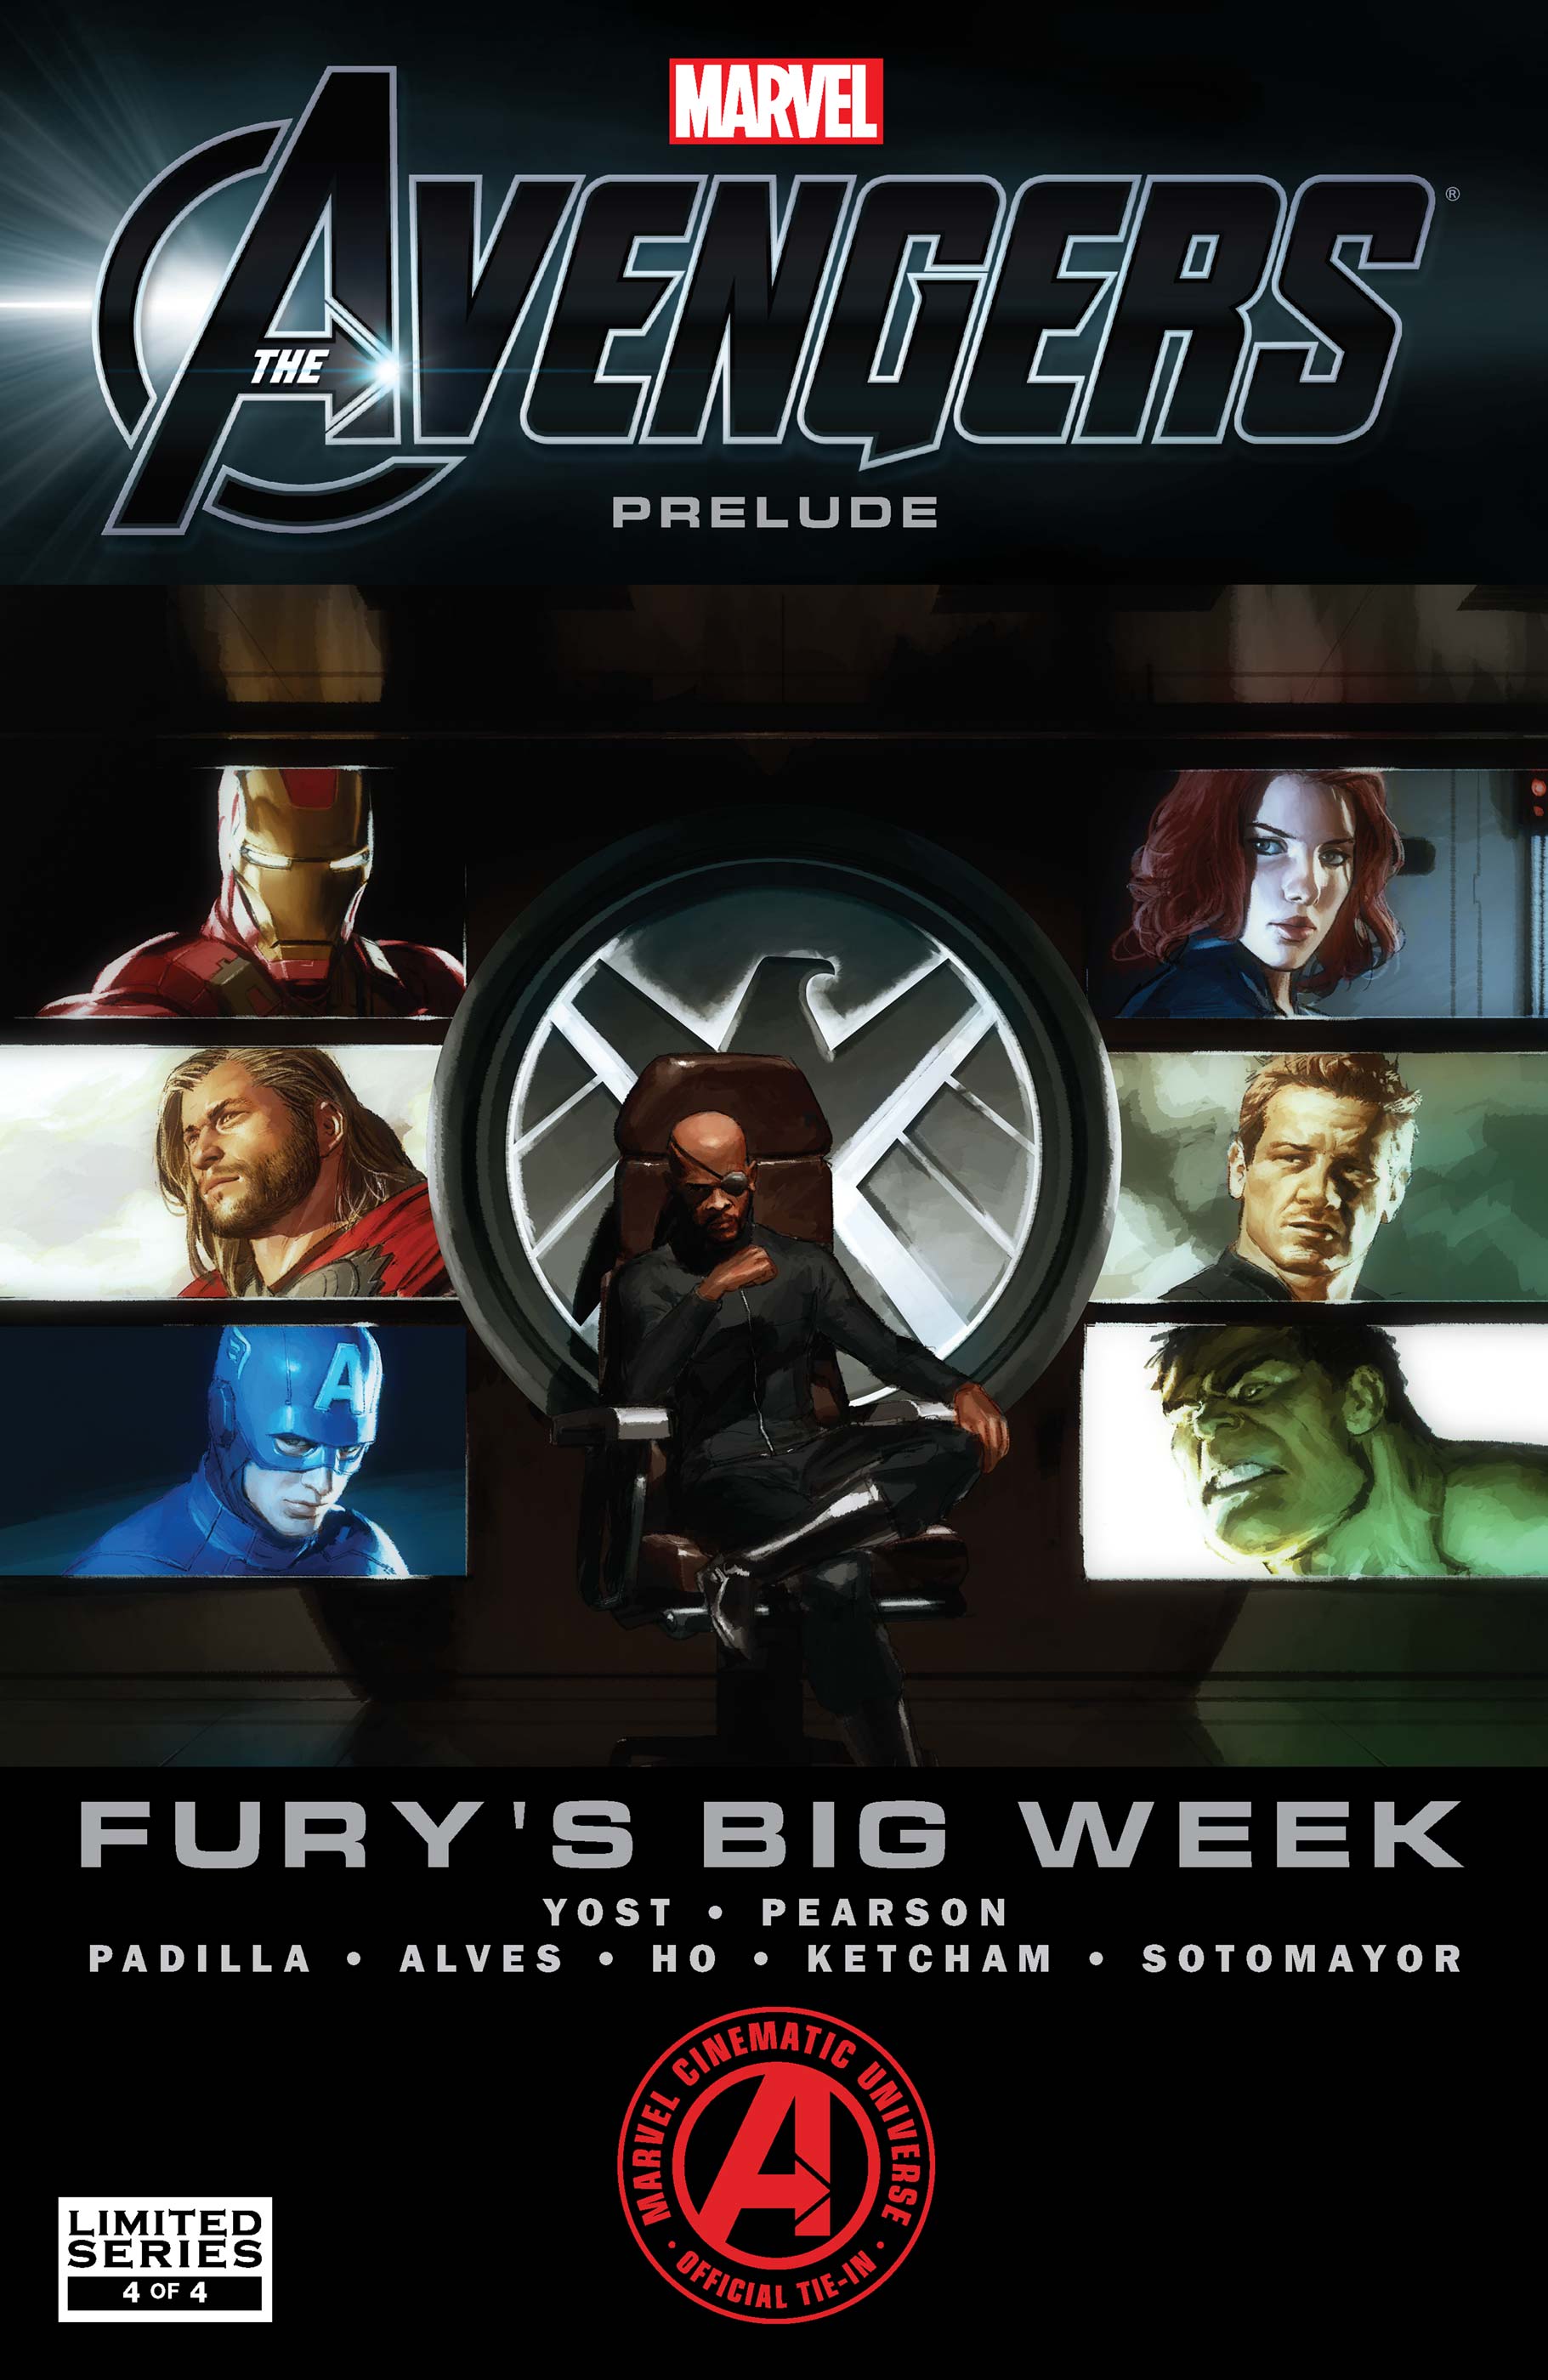 Marvel's The Avengers Prelude: Fury's Big Week (2011) #4